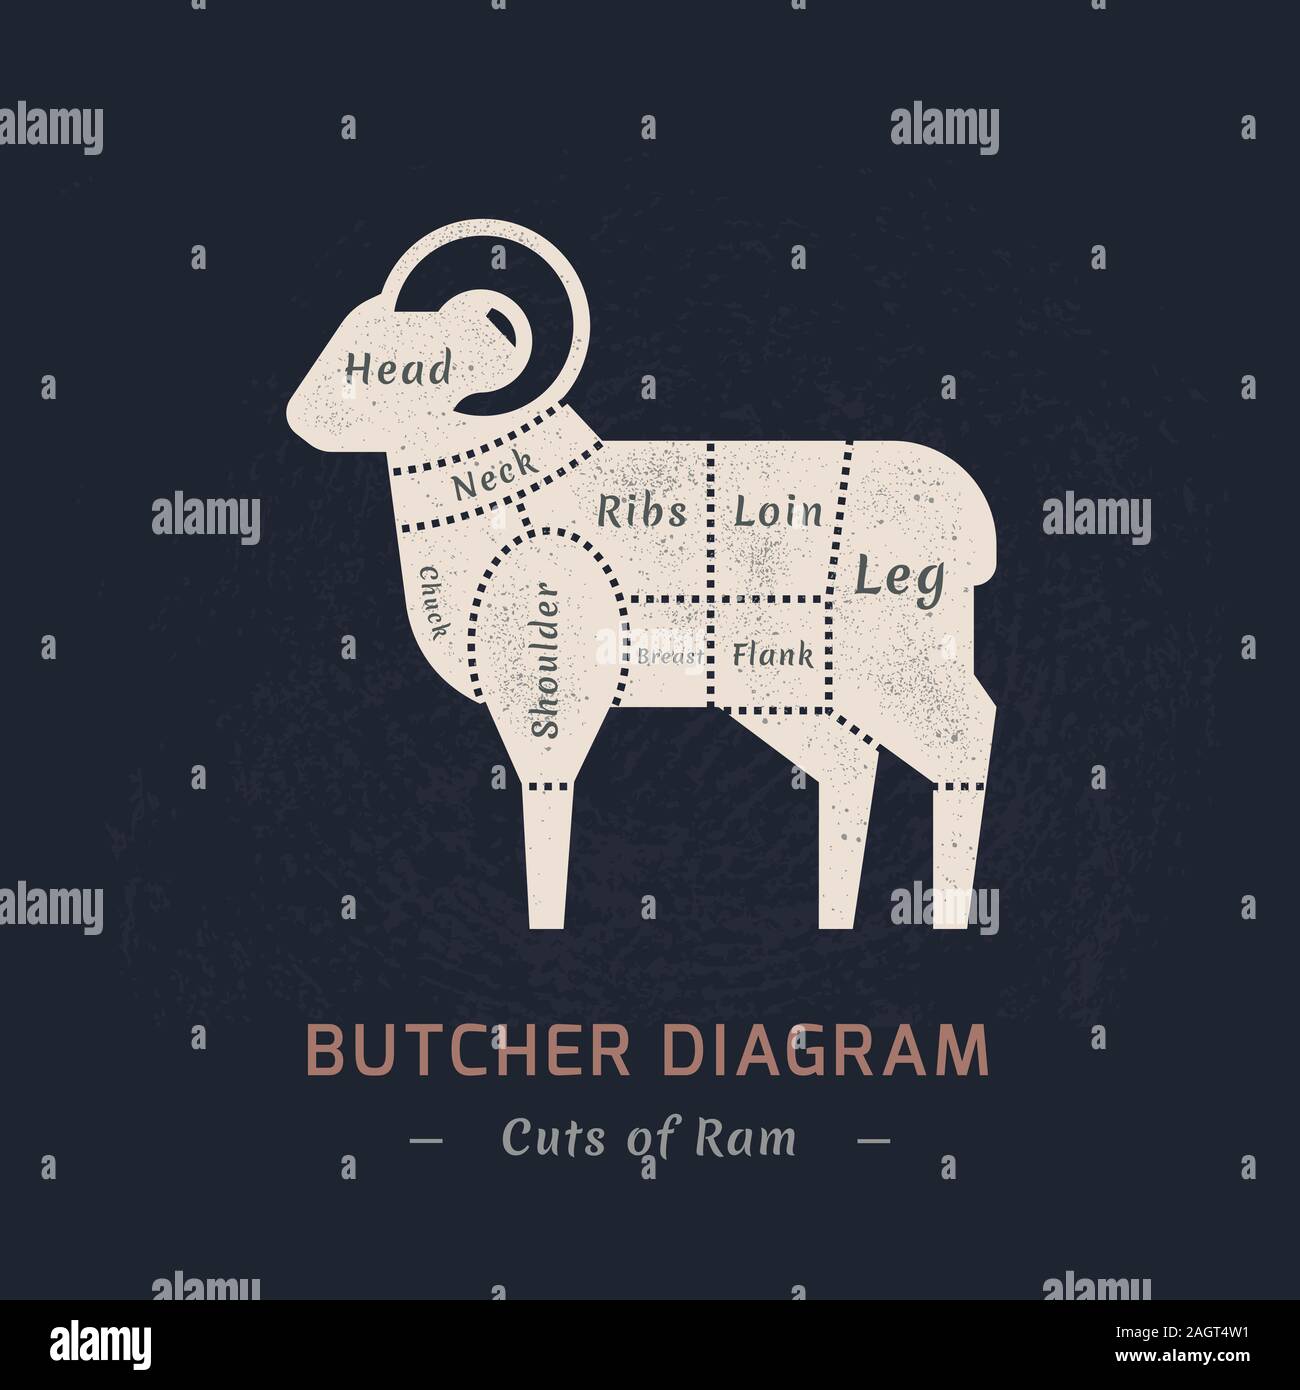 LAMB SHEEP Cuts of Meat Diagram Wall Sticker Home Decor Kitchen 